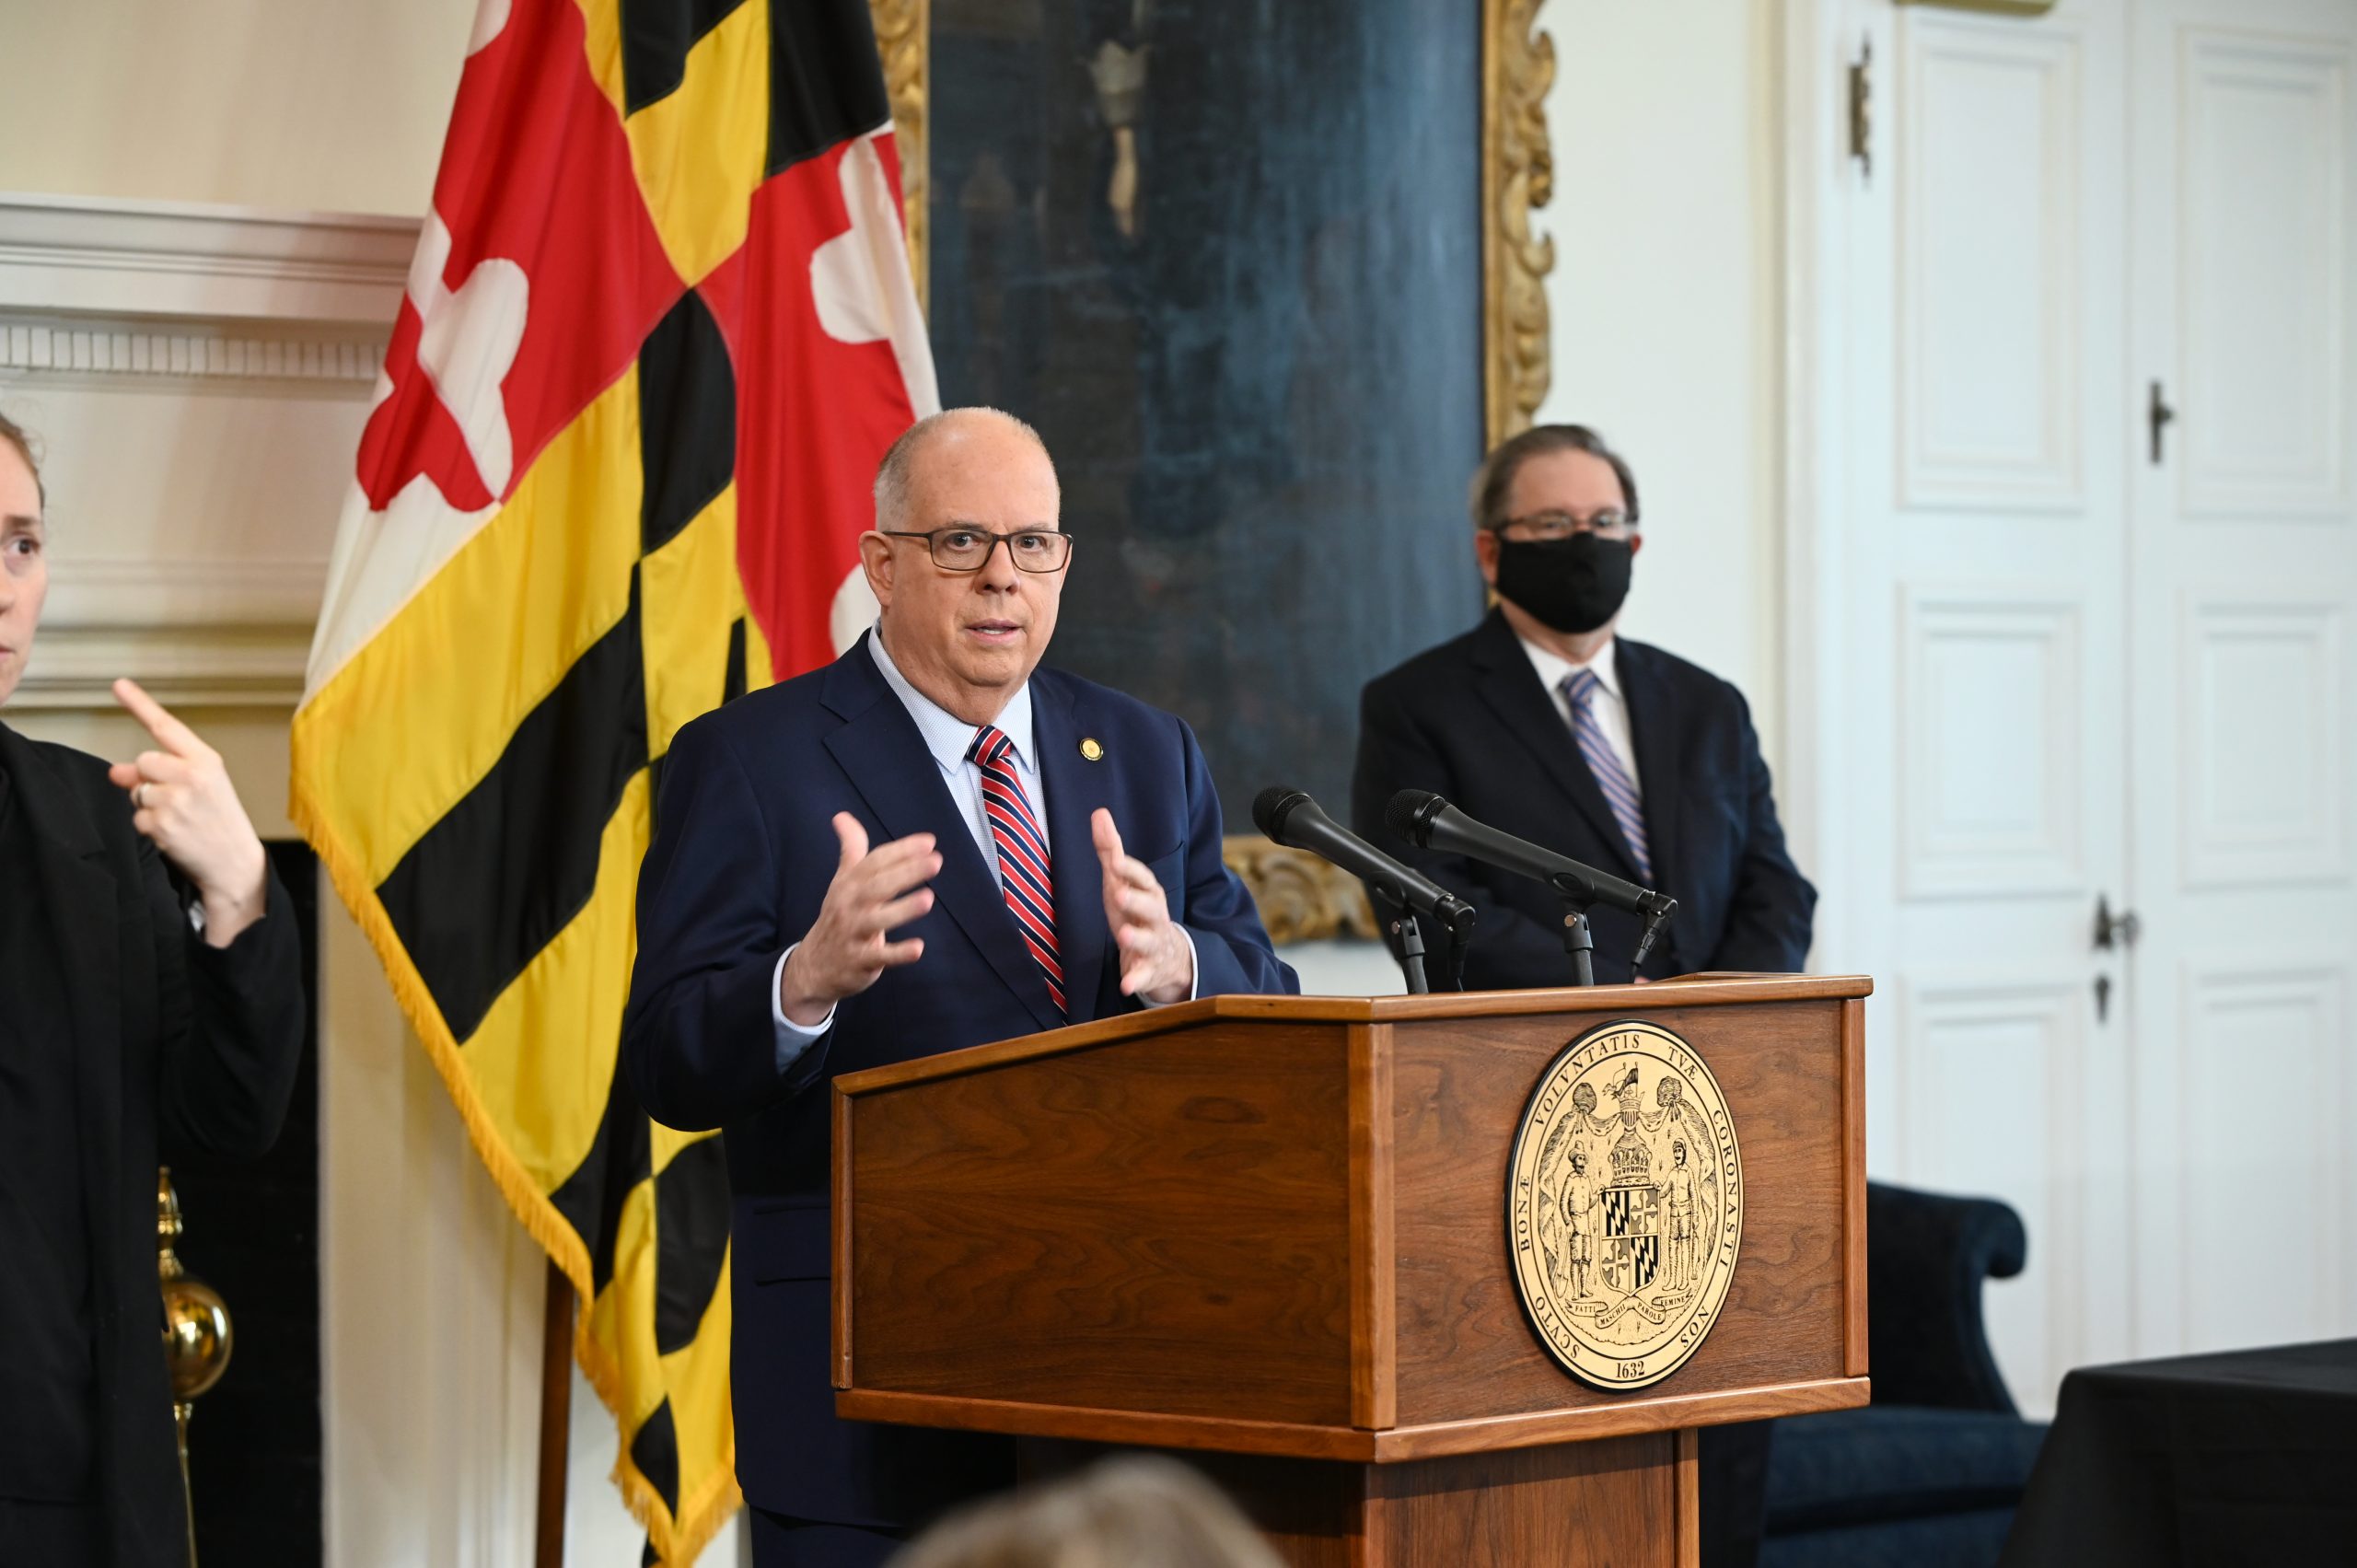 (Photo: Gov. Larry Hogan, R, gives remarks during a press conference on redistricting reform Jan 12, 2020./Maryland GovPics)